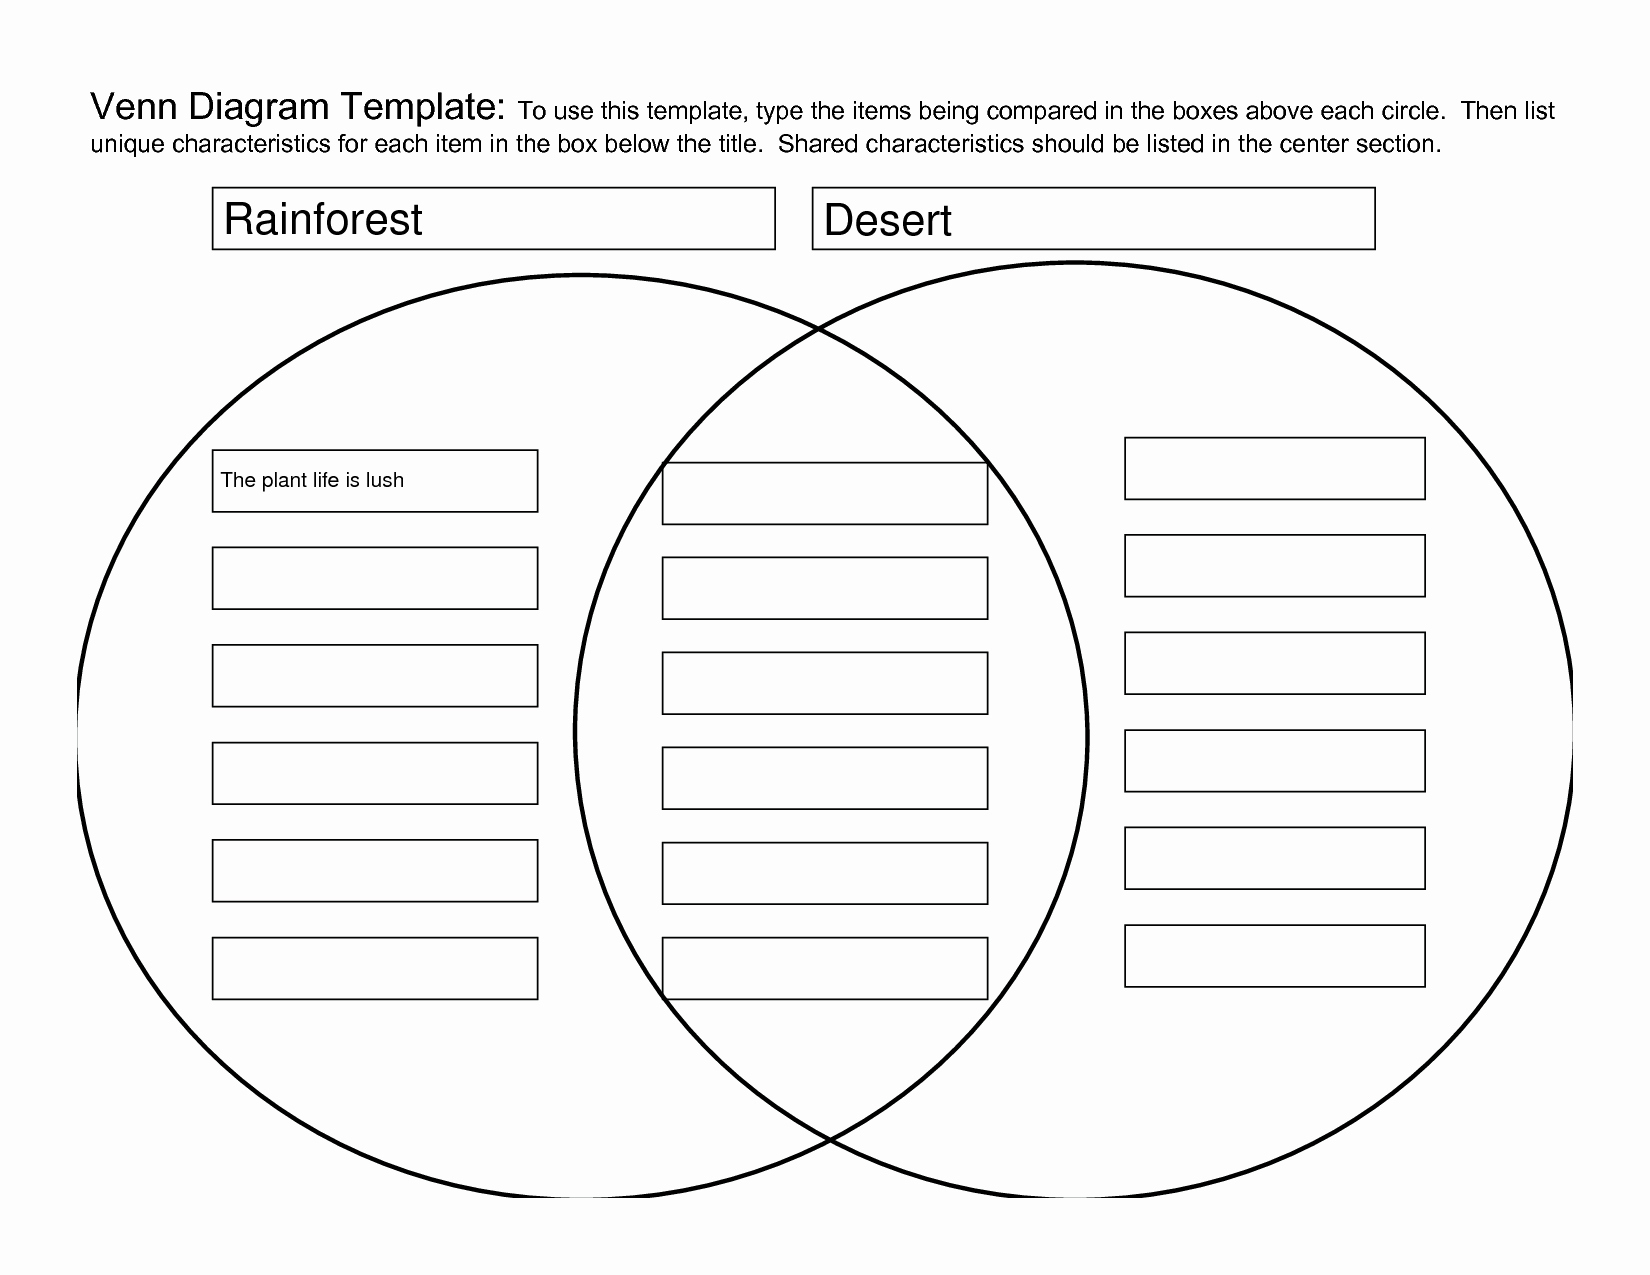 Printable Venn Diagram Venn Diagram Template Printable With Lines Floss Papers